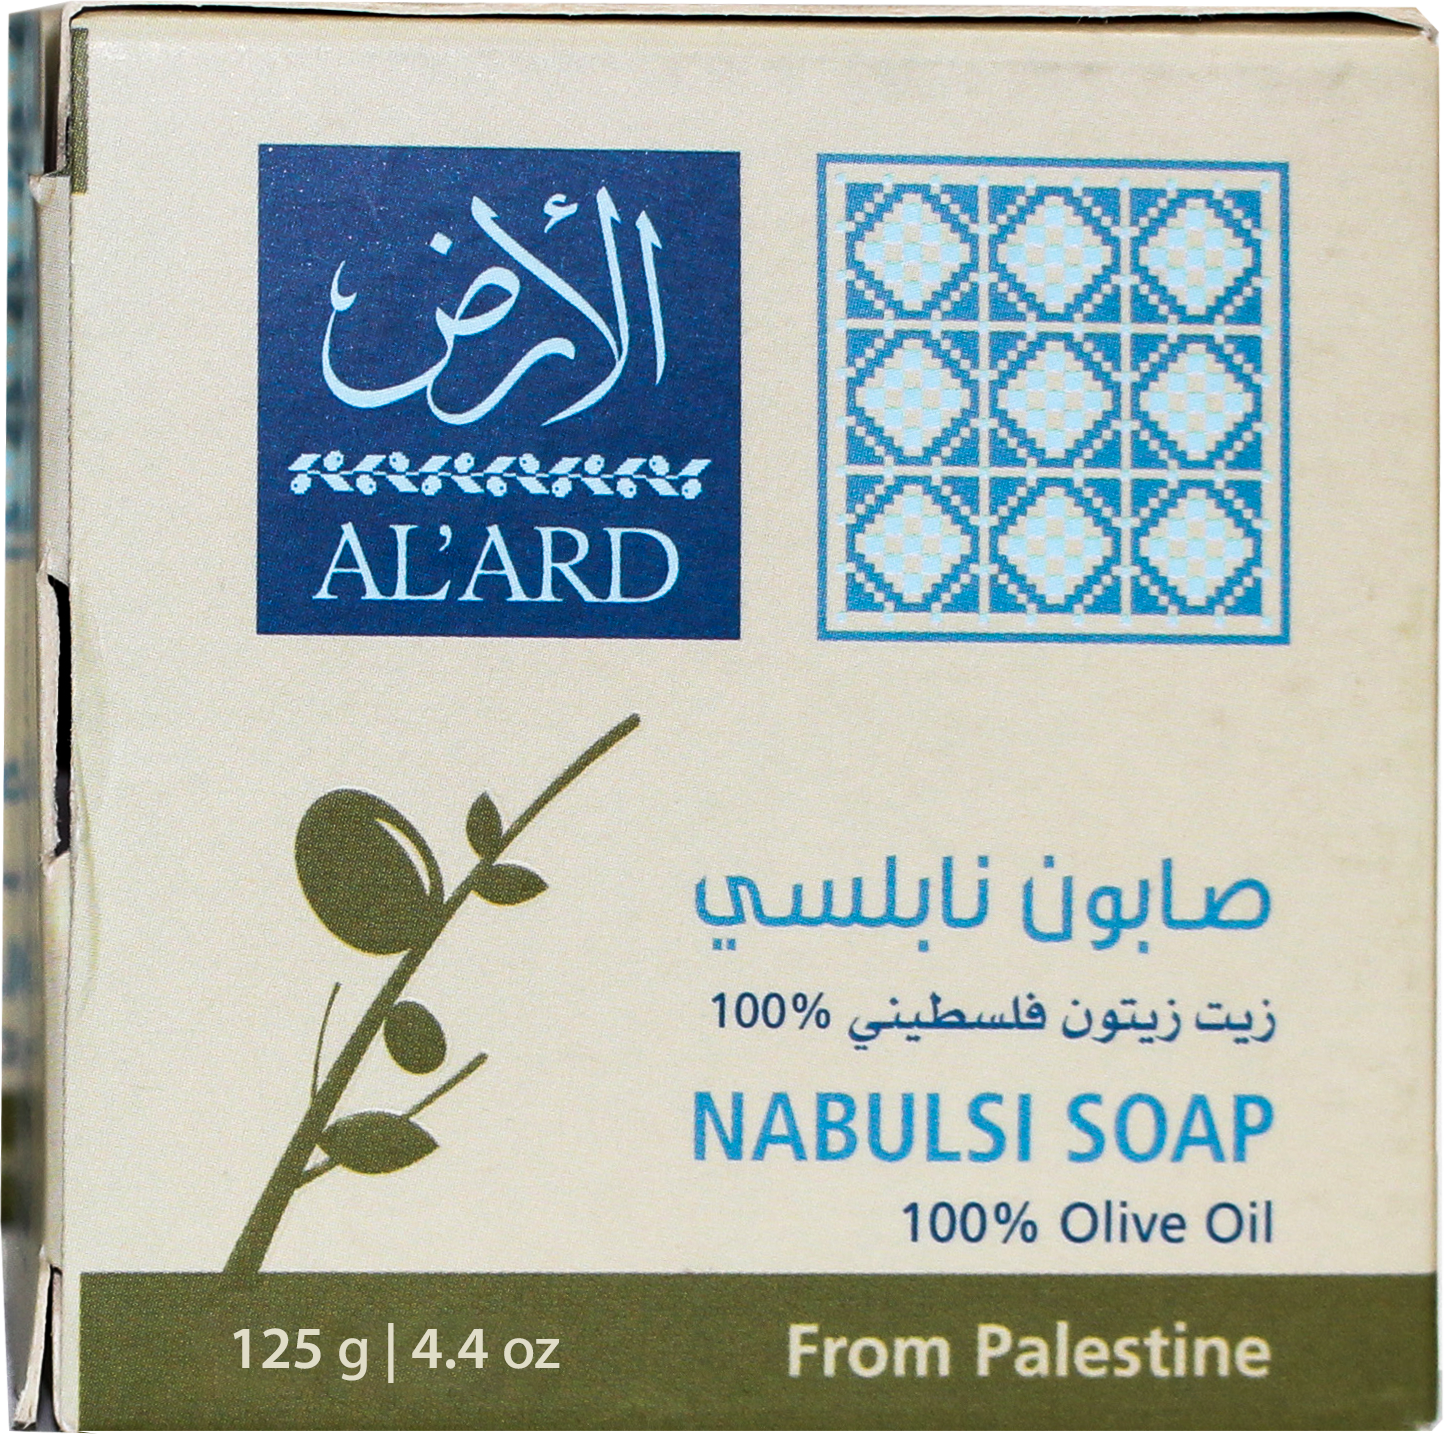 150g Nablus Soap